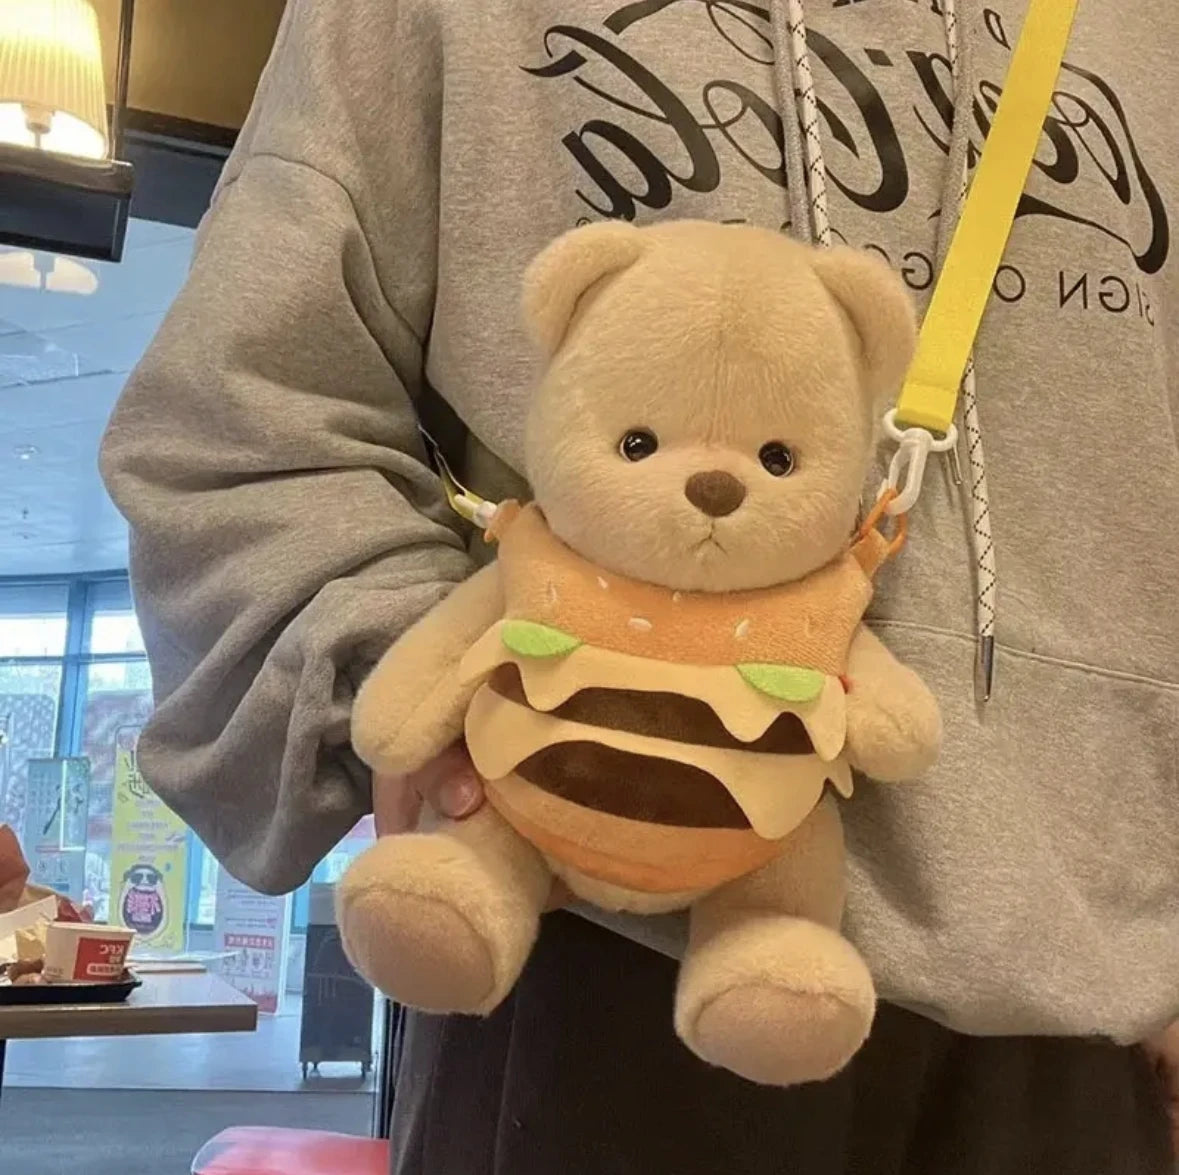 Adorable Plush Teddy Bear Gift